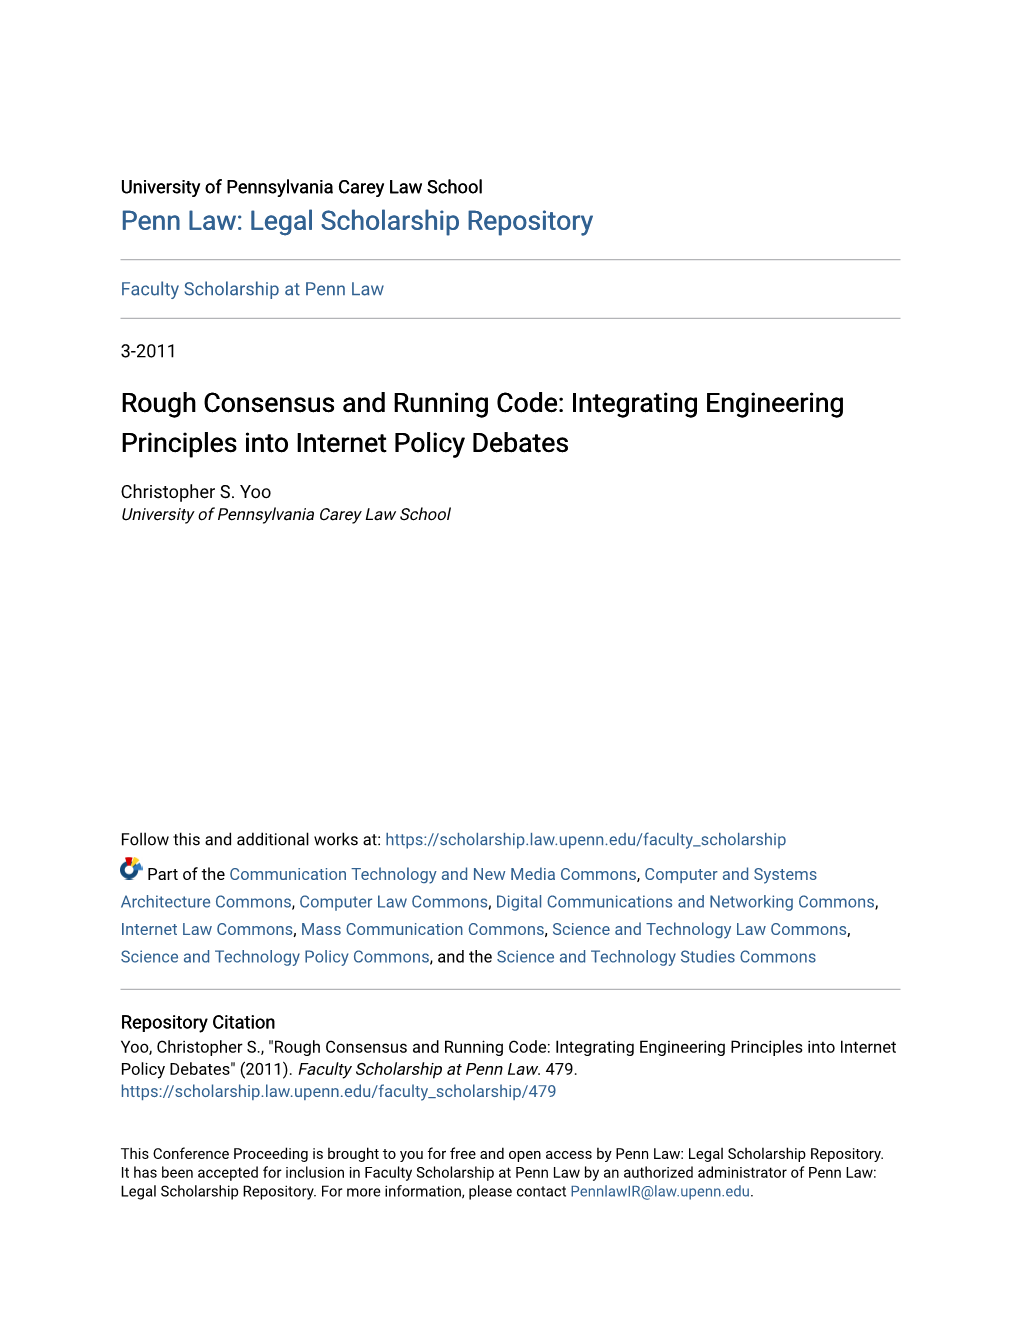 Rough Consensus and Running Code: Integrating Engineering Principles Into Internet Policy Debates